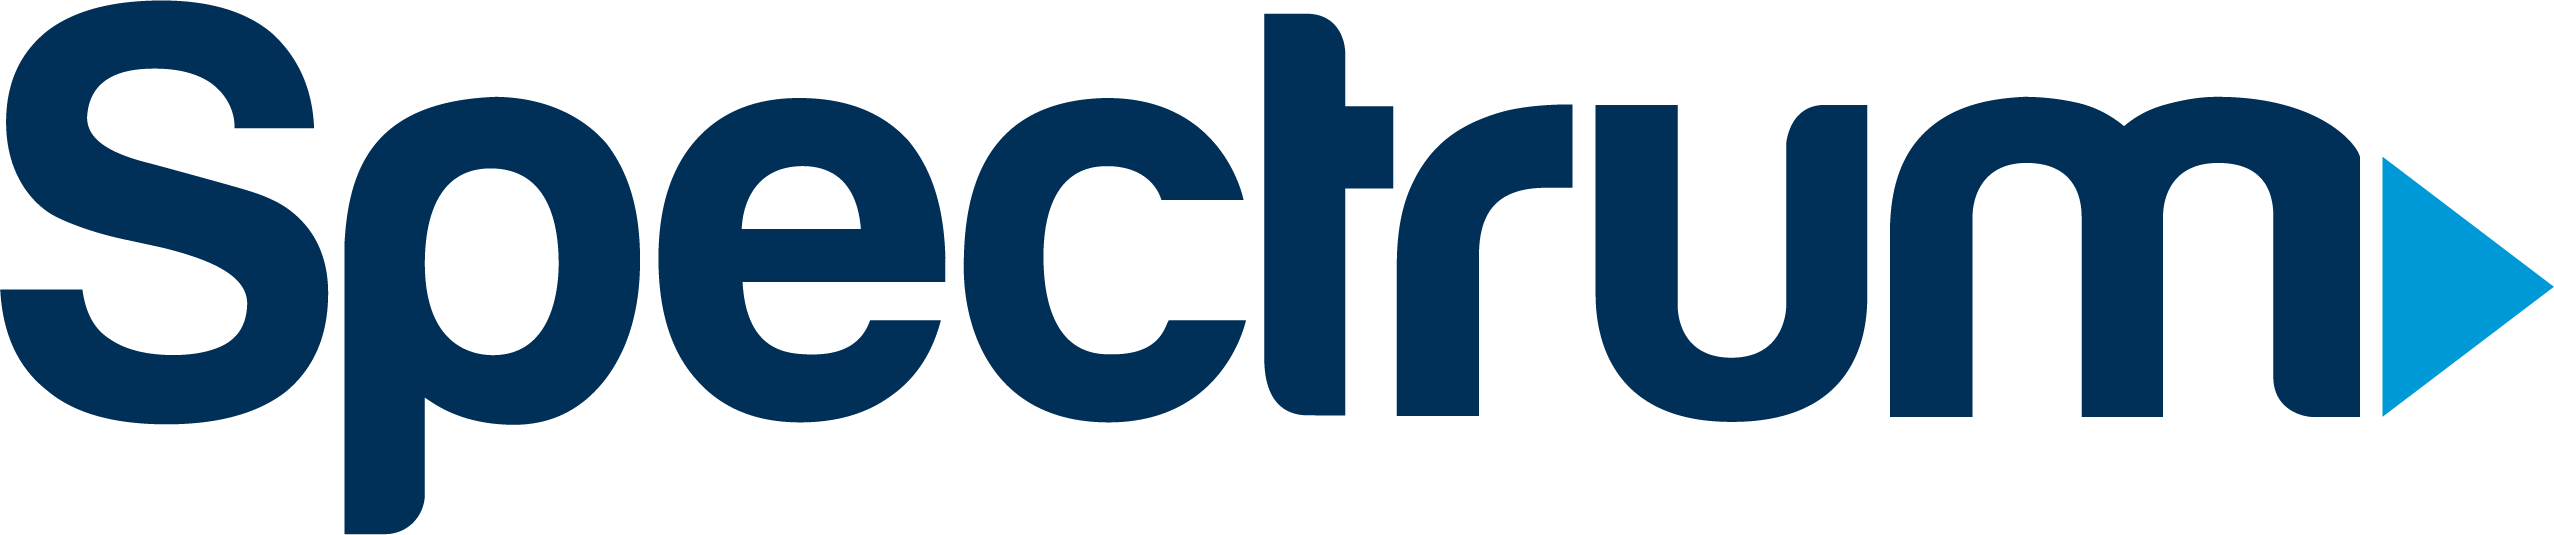 Spectrum logo.